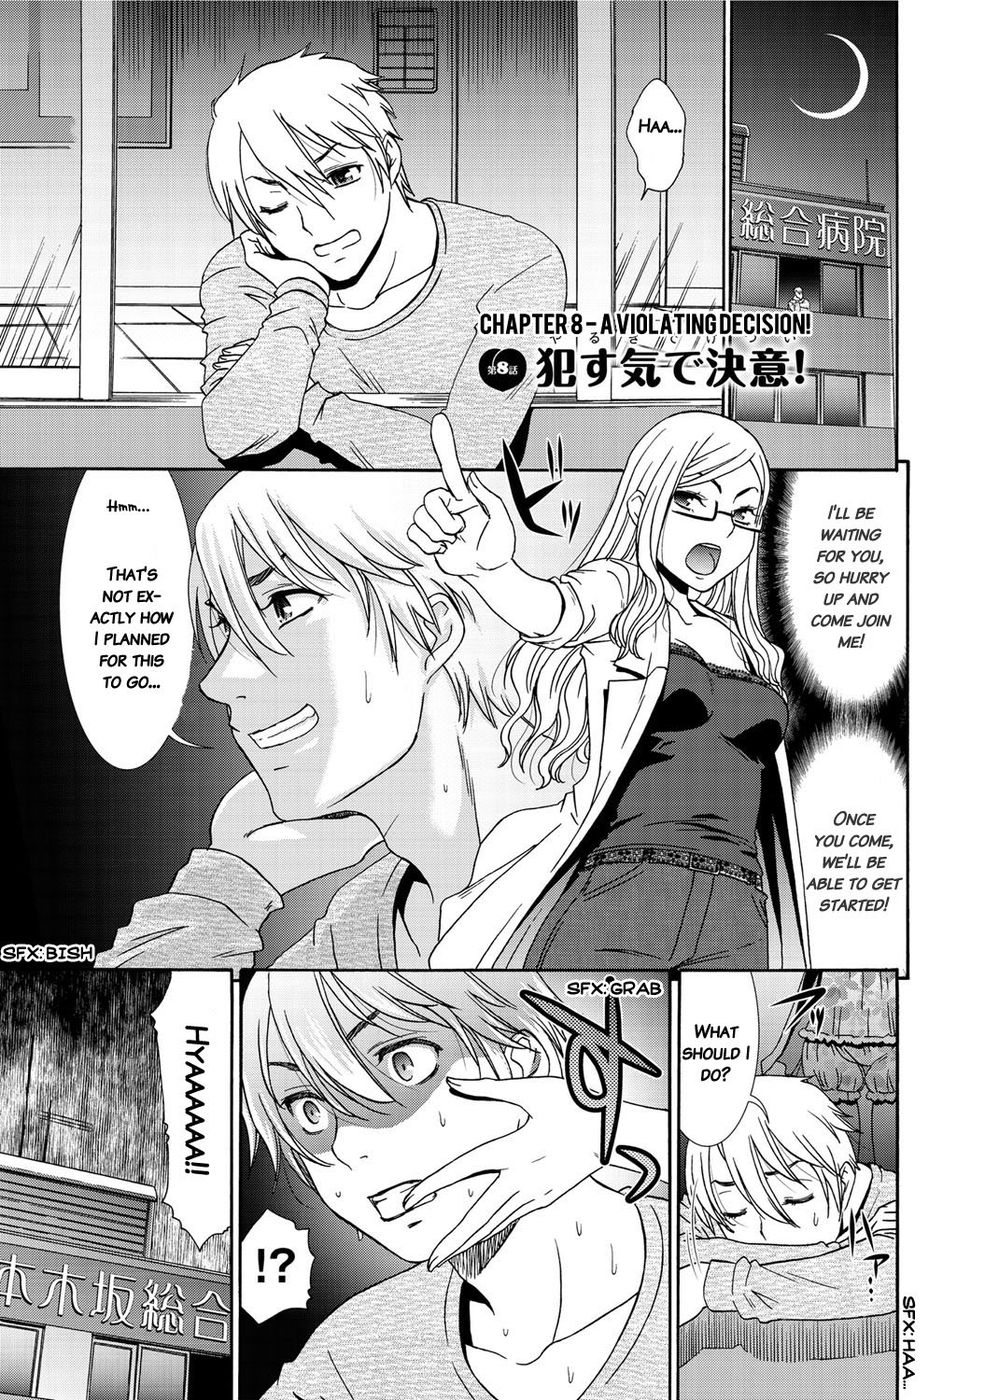 Hentai Manga Comic-Momoiro Nurse-Chapter 8 - Aviolating decision!-1